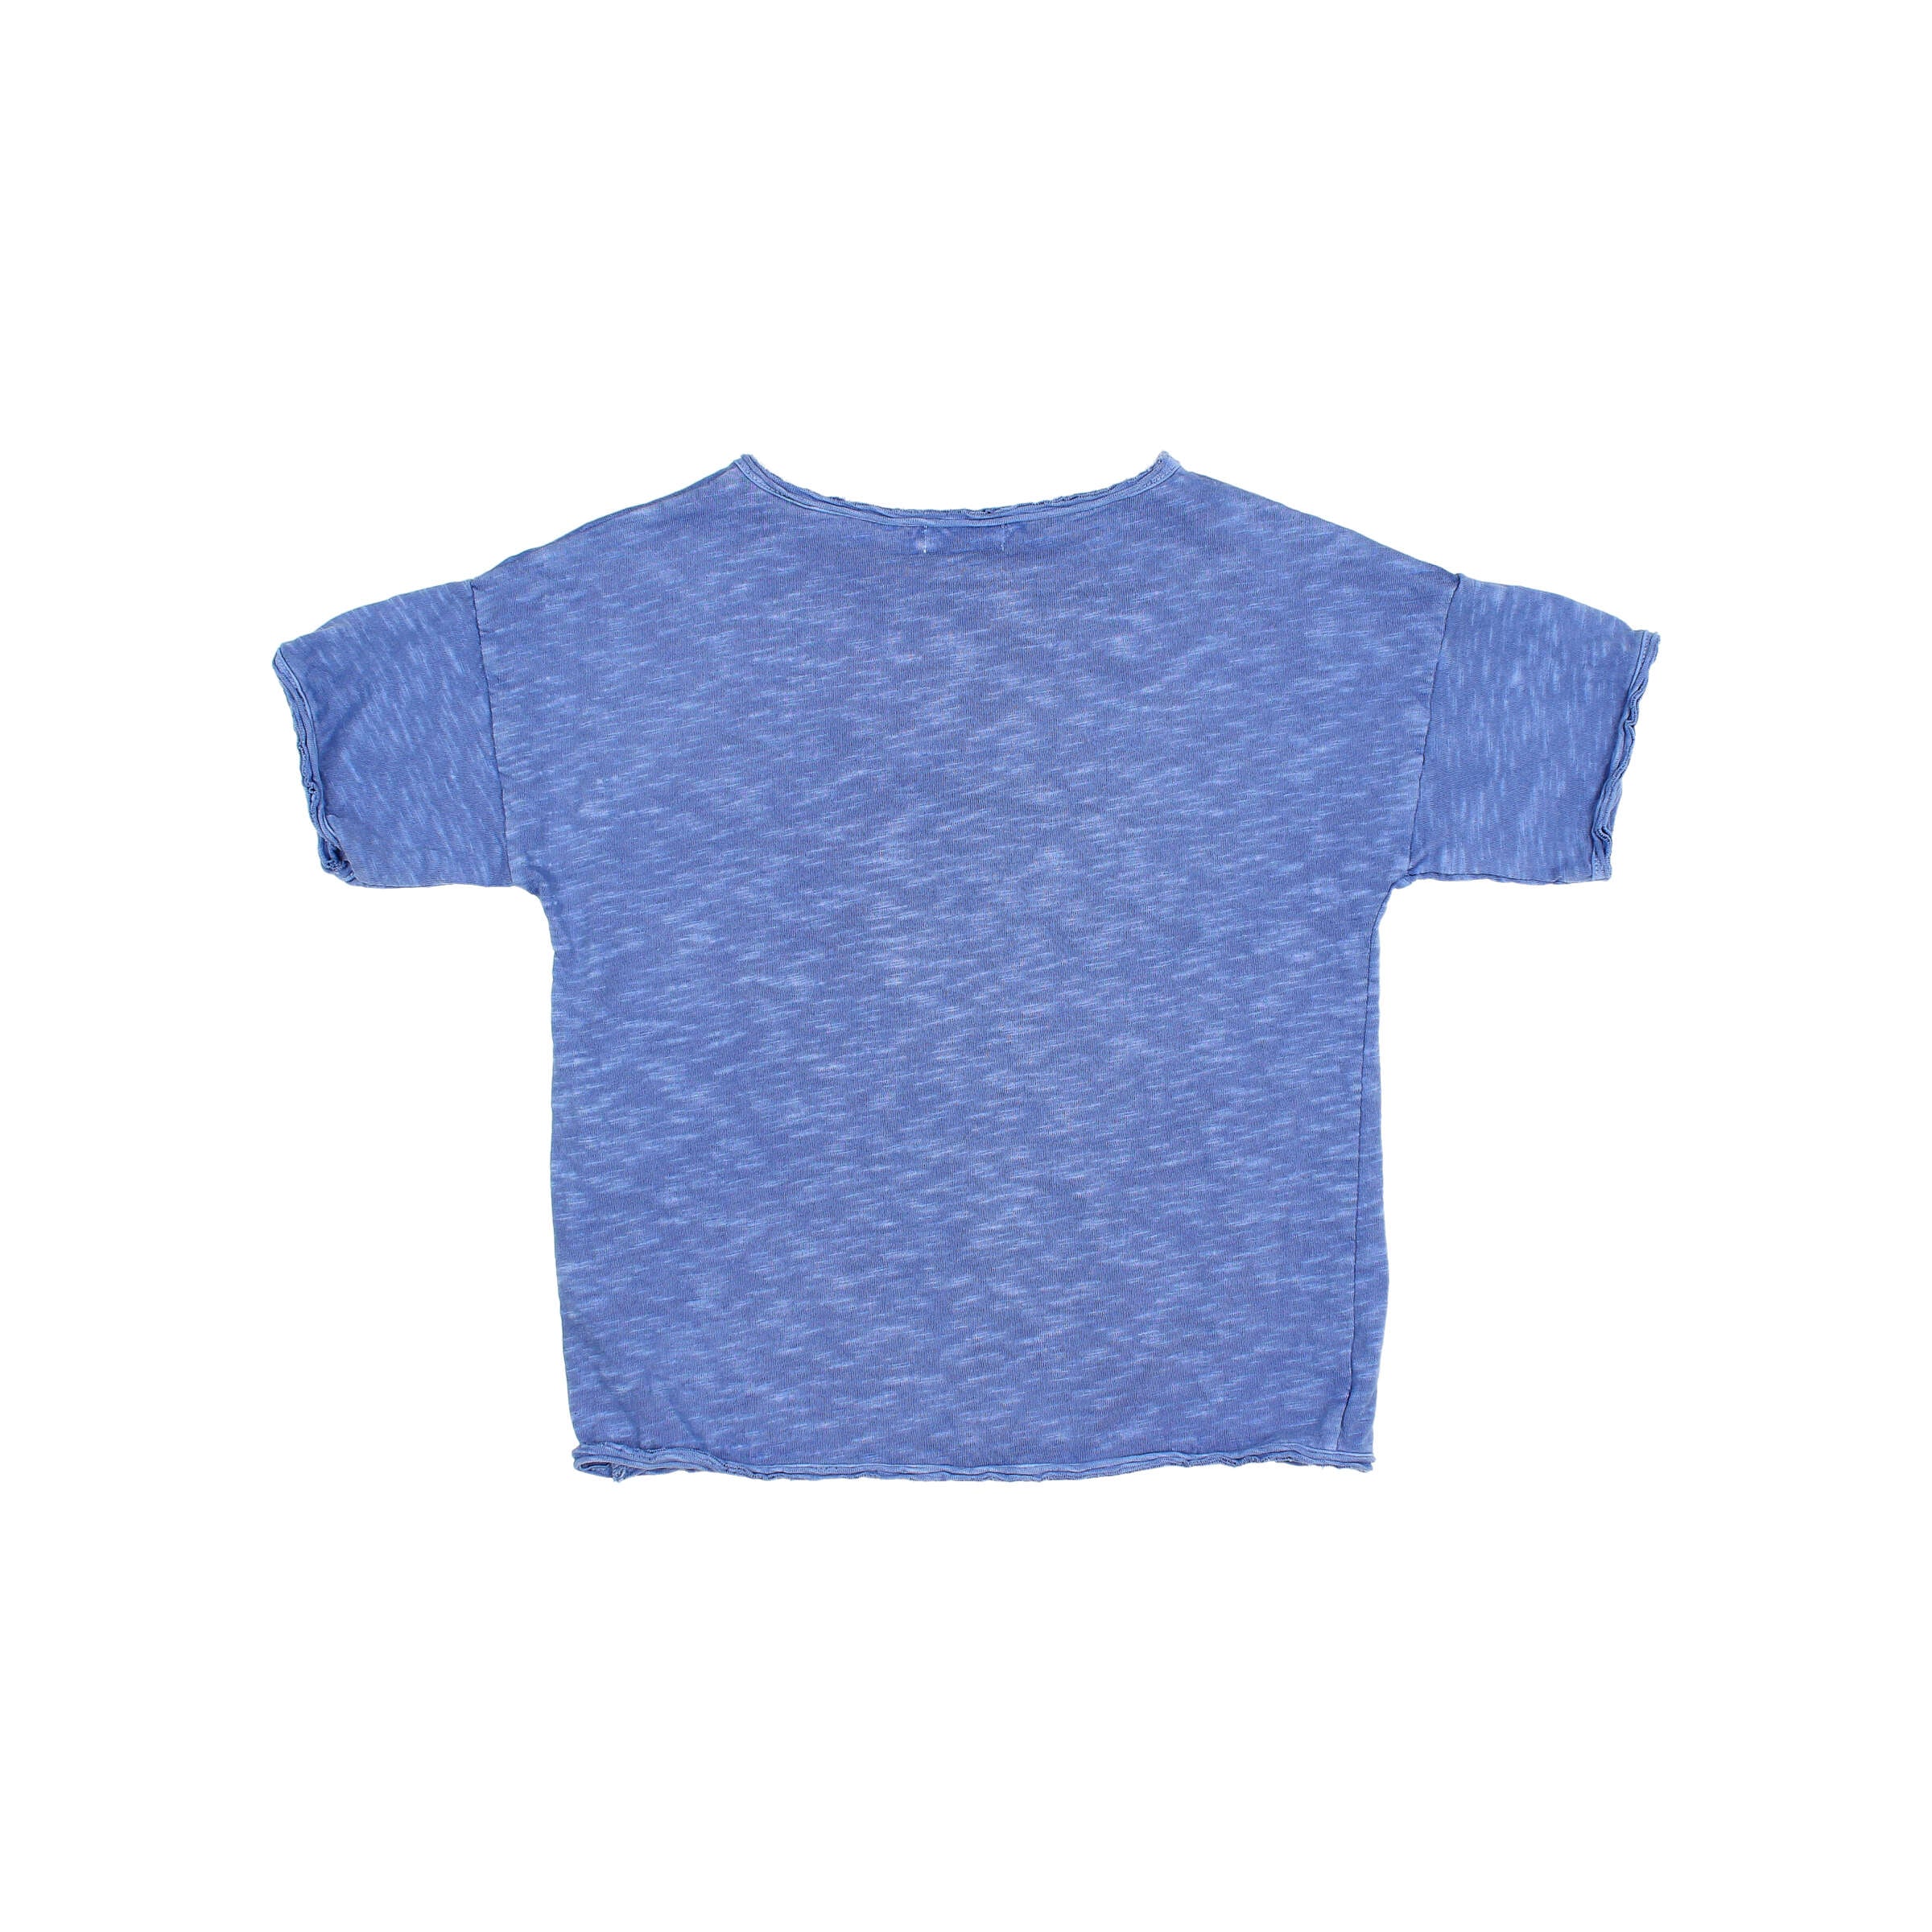 Buho - kids - washed t-shirt - blue surf